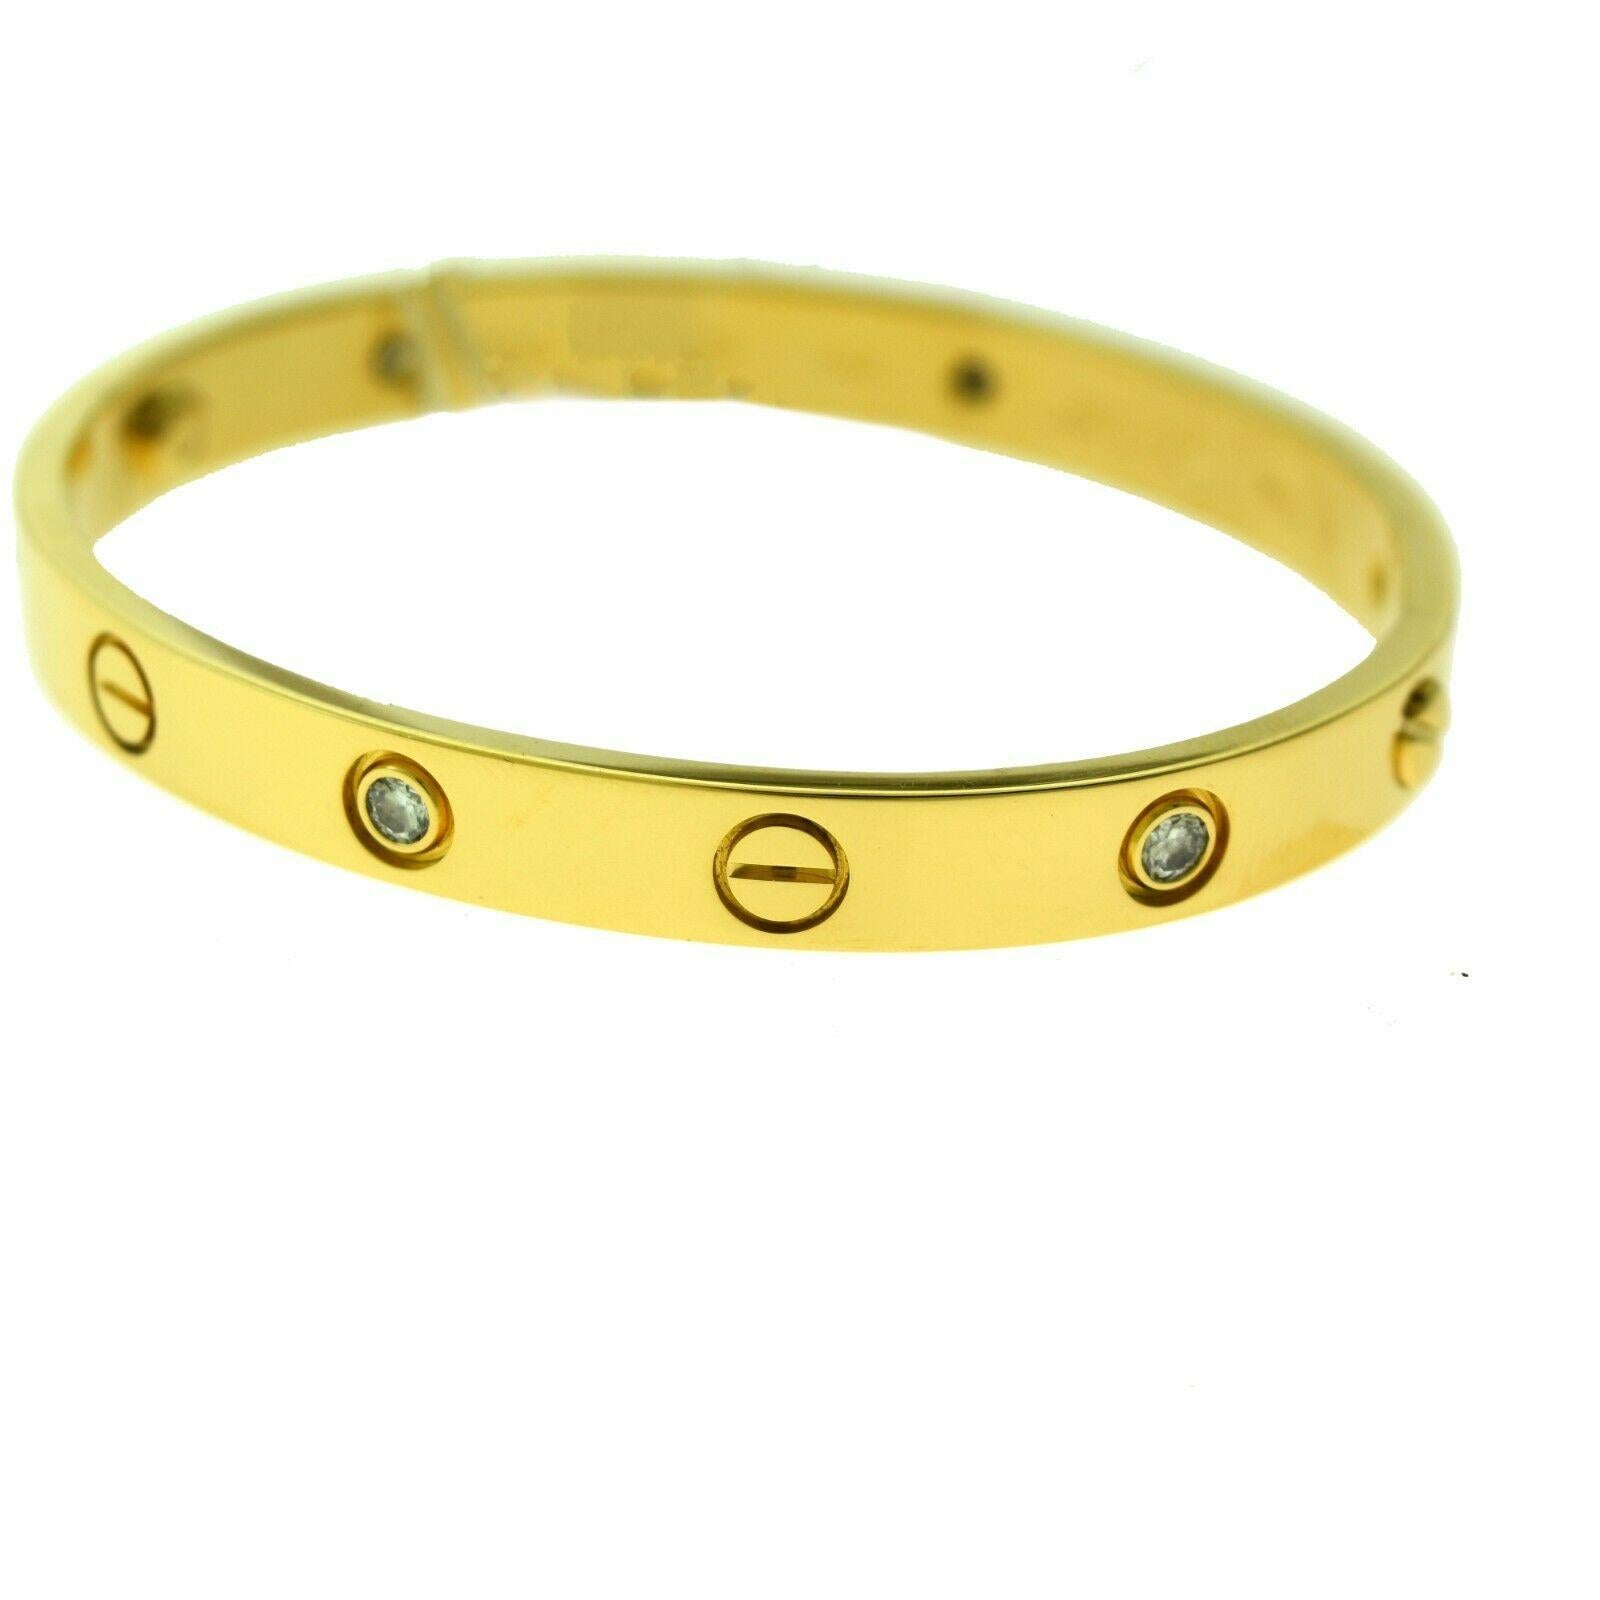 Designer: Cartier

Collection: Love

Style: Bangle Bracelet

Metal: Yellow Gold

Metal Purity: 18k

Bracelet Size: 16 = 16 cm

Stones: 6 Round Brilliant Cut Diamonds

Hallmarks: 16, Au750 Cartier, Serial No., 1998

Screw System: 